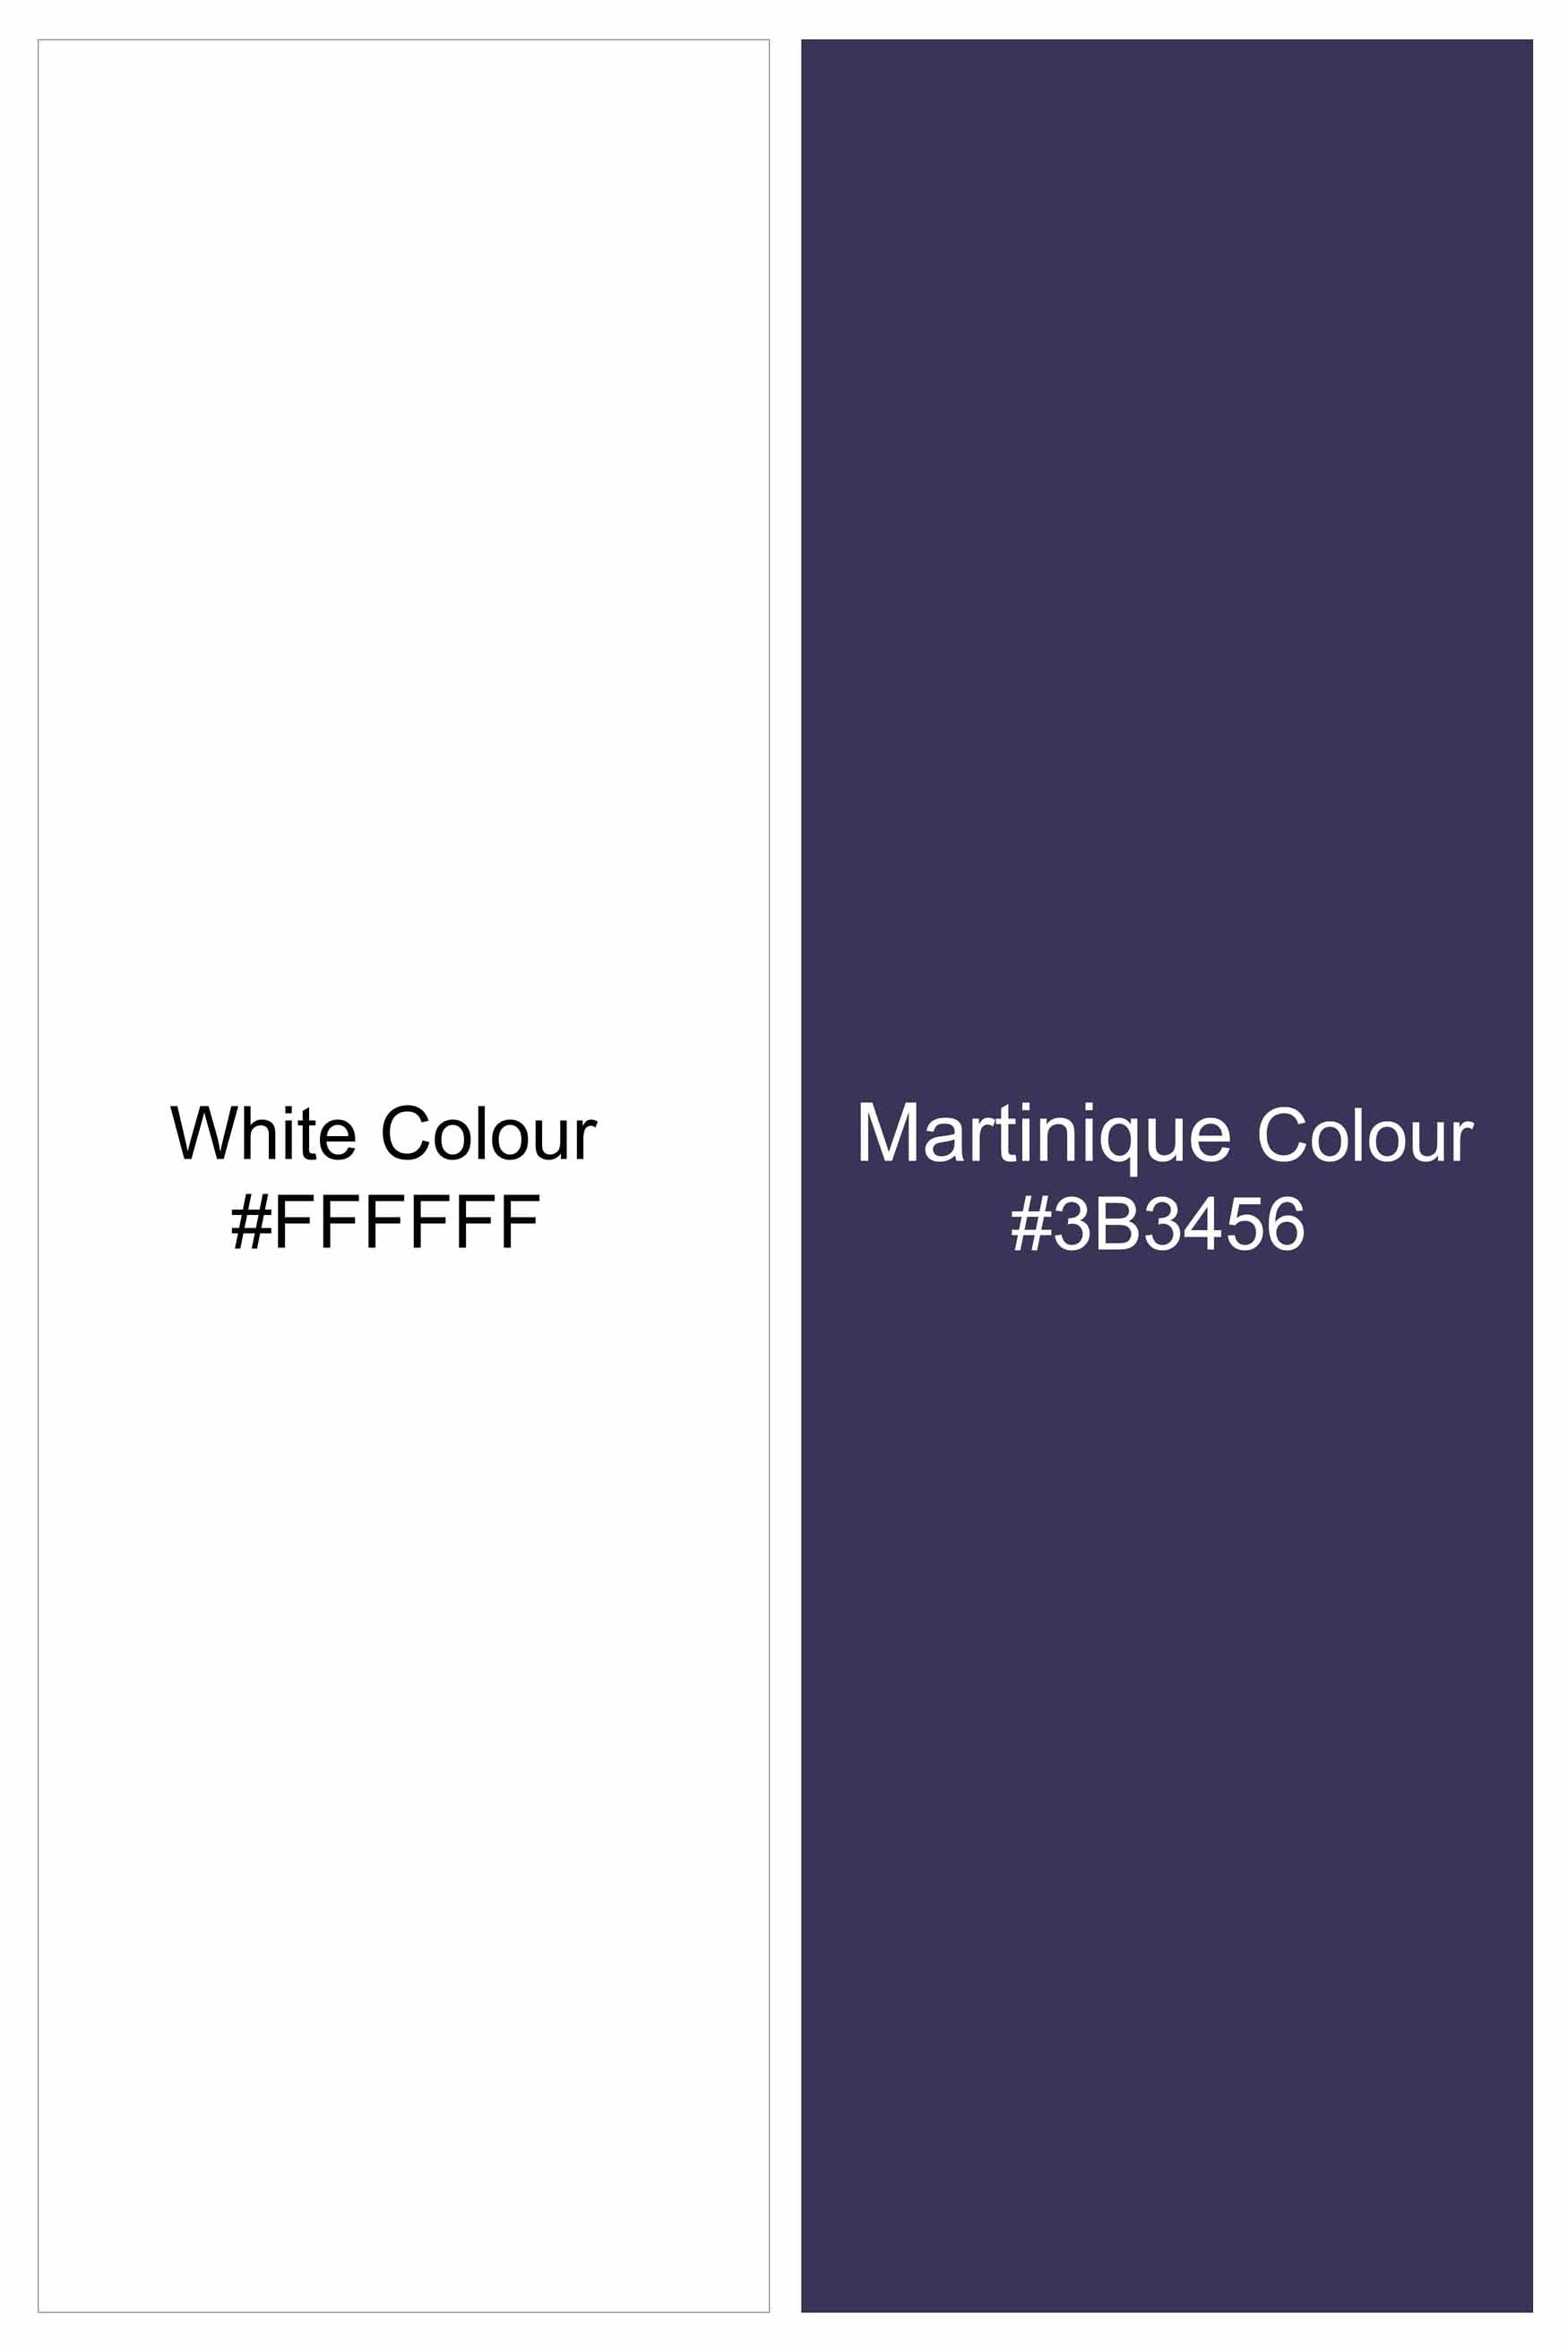 Bright White with Martinique Blue Hand Painted Super Soft Premium Cotton Designer Shirt 6336-M-ART-38, 6336-M-ART-H-38, 6336-M-ART-39, 6336-M-ART-H-39, 6336-M-ART-40, 6336-M-ART-H-40, 6336-M-ART-42, 6336-M-ART-H-42, 6336-M-ART-44, 6336-M-ART-H-44, 6336-M-ART-46, 6336-M-ART-H-46, 6336-M-ART-48, 6336-M-ART-H-48, 6336-M-ART-50, 6336-M-ART-H-50, 6336-M-ART-52, 6336-M-ART-H-52